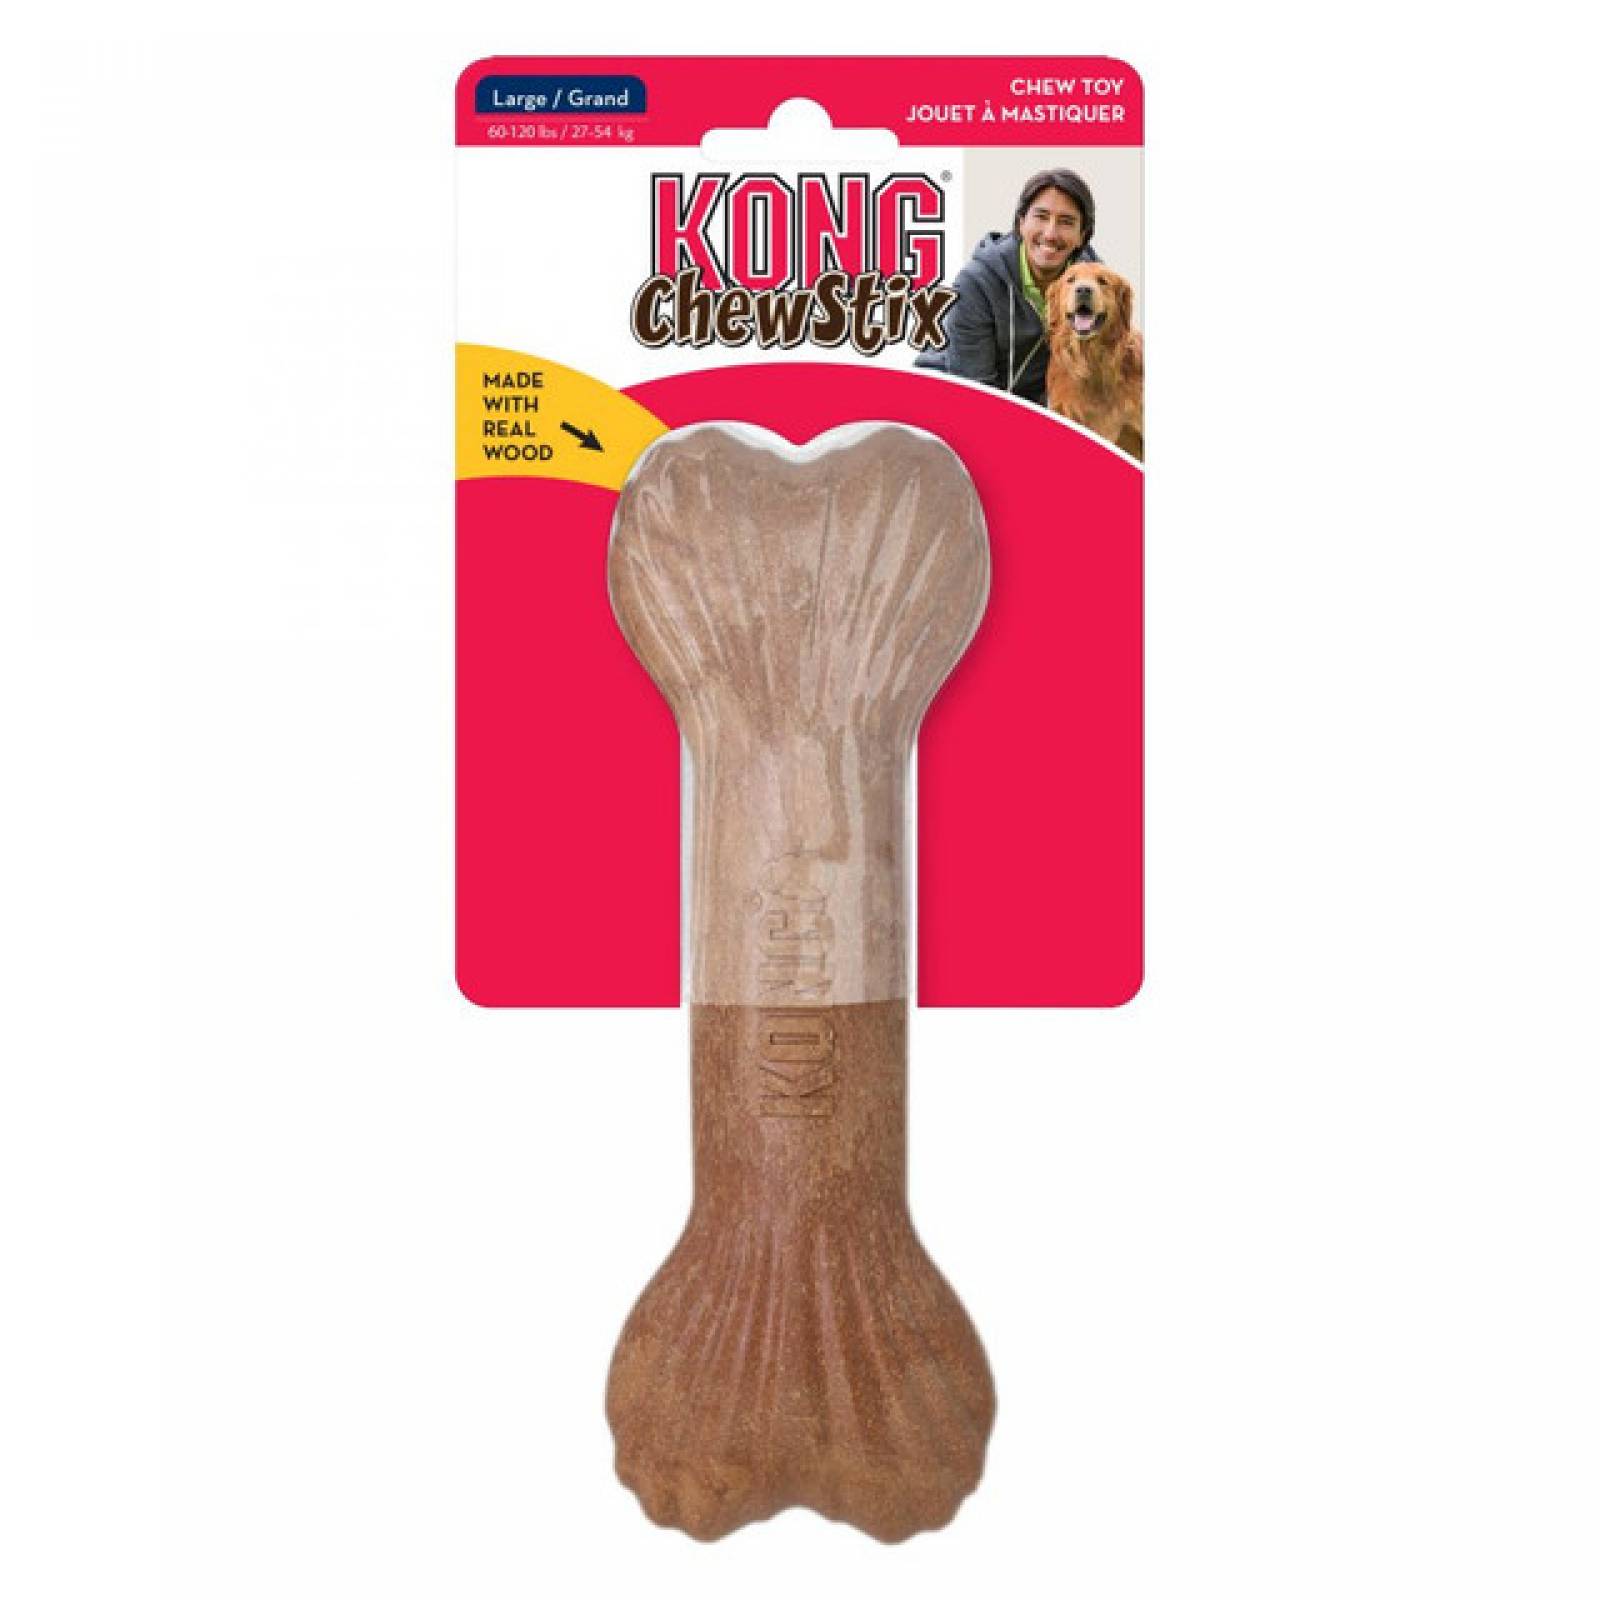 Kong Chewstix juguete para perro Hueso para masticar aroma a tocino Gde